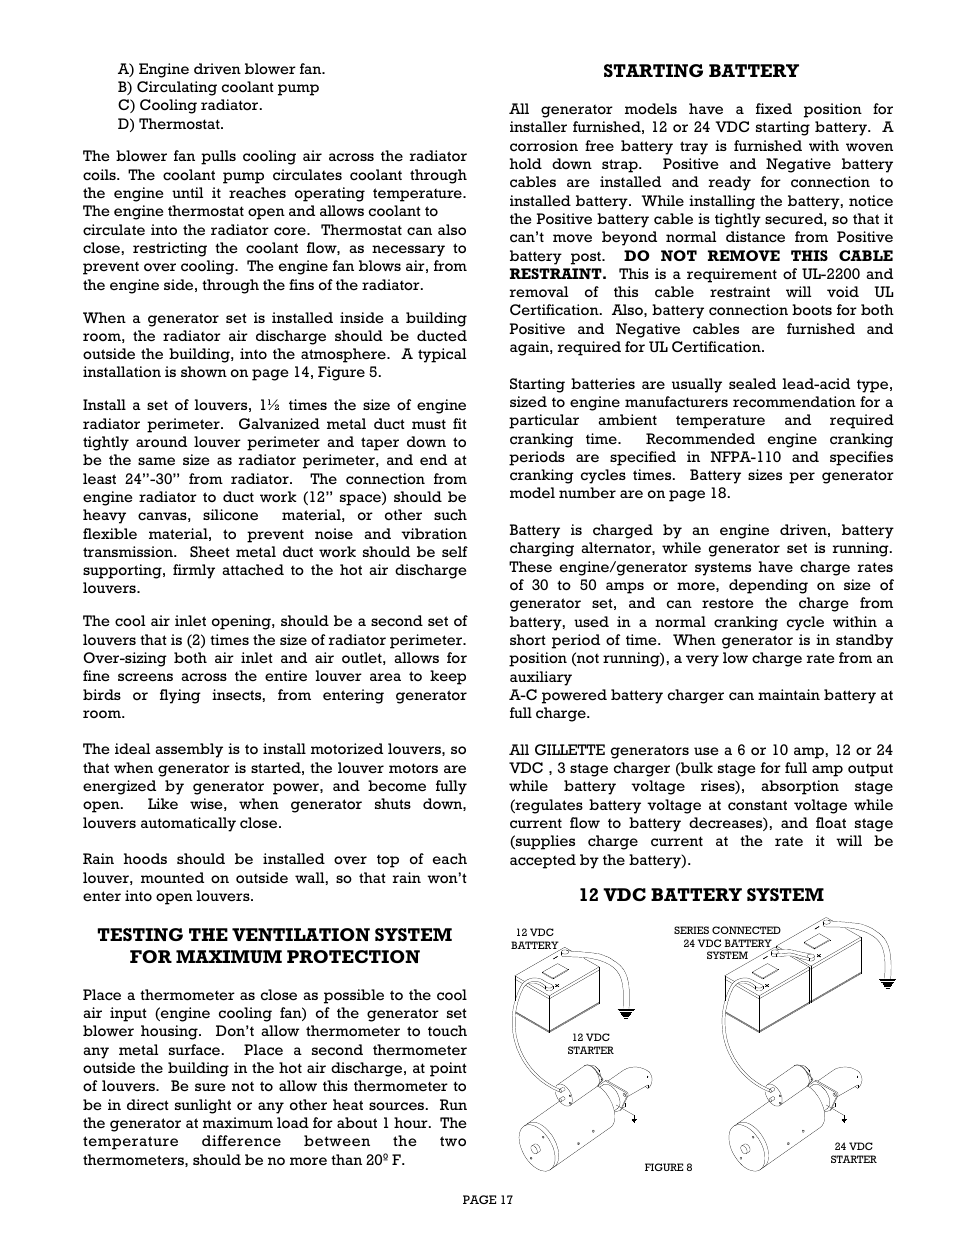 Starting battery, 12 vdc battery system | Gillette Generators SPMD-2500 THRU SPMD-4000 User Manual | Page 17 / 27